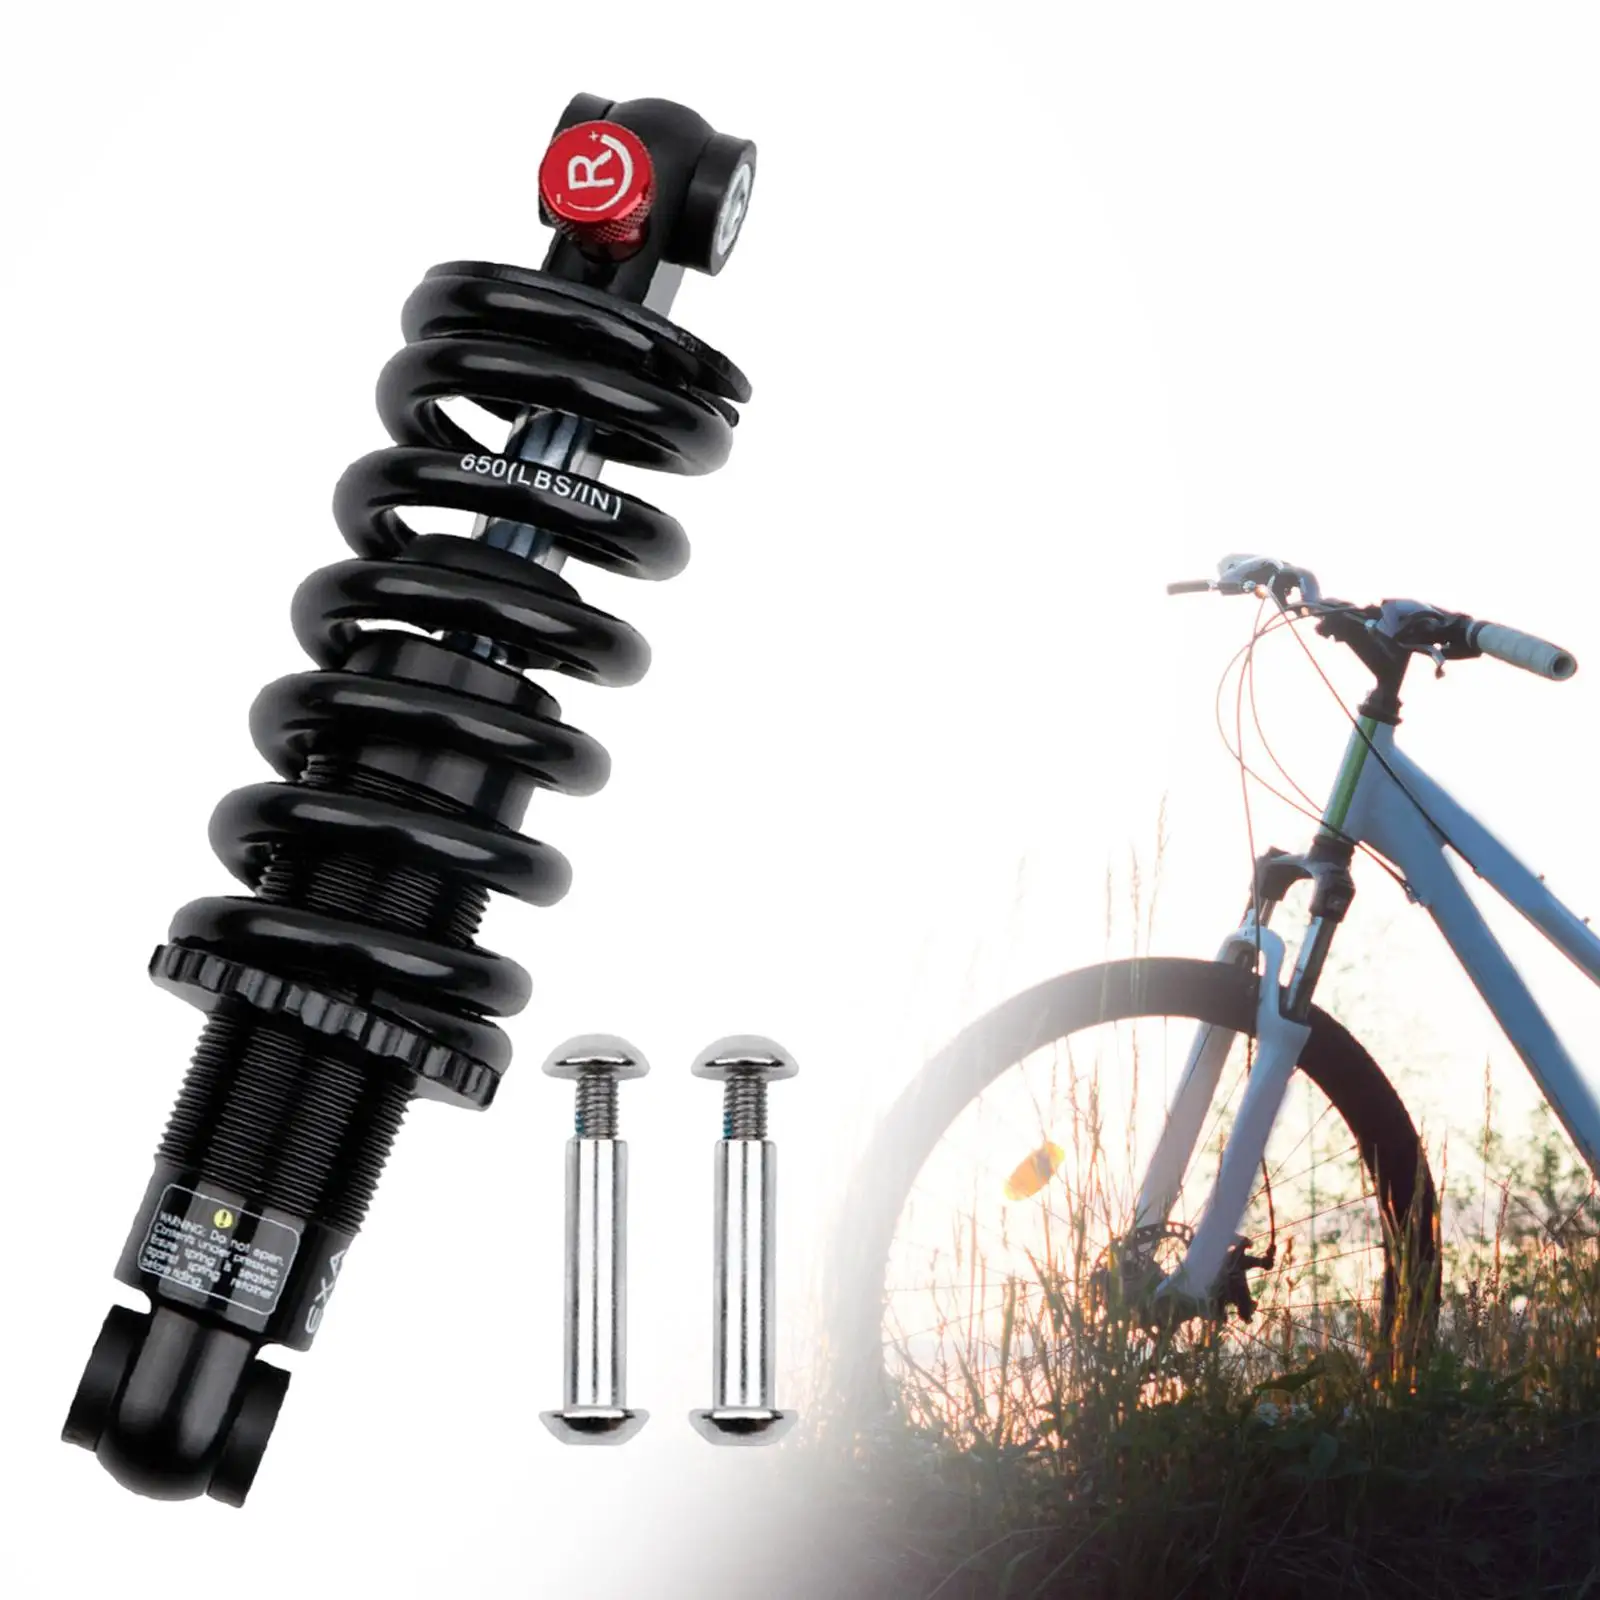 Road Bikes Damping Shocks, Bike Coil Shock Absorber, 650lbs, 165mm, Bicycle Rear Spring Shock